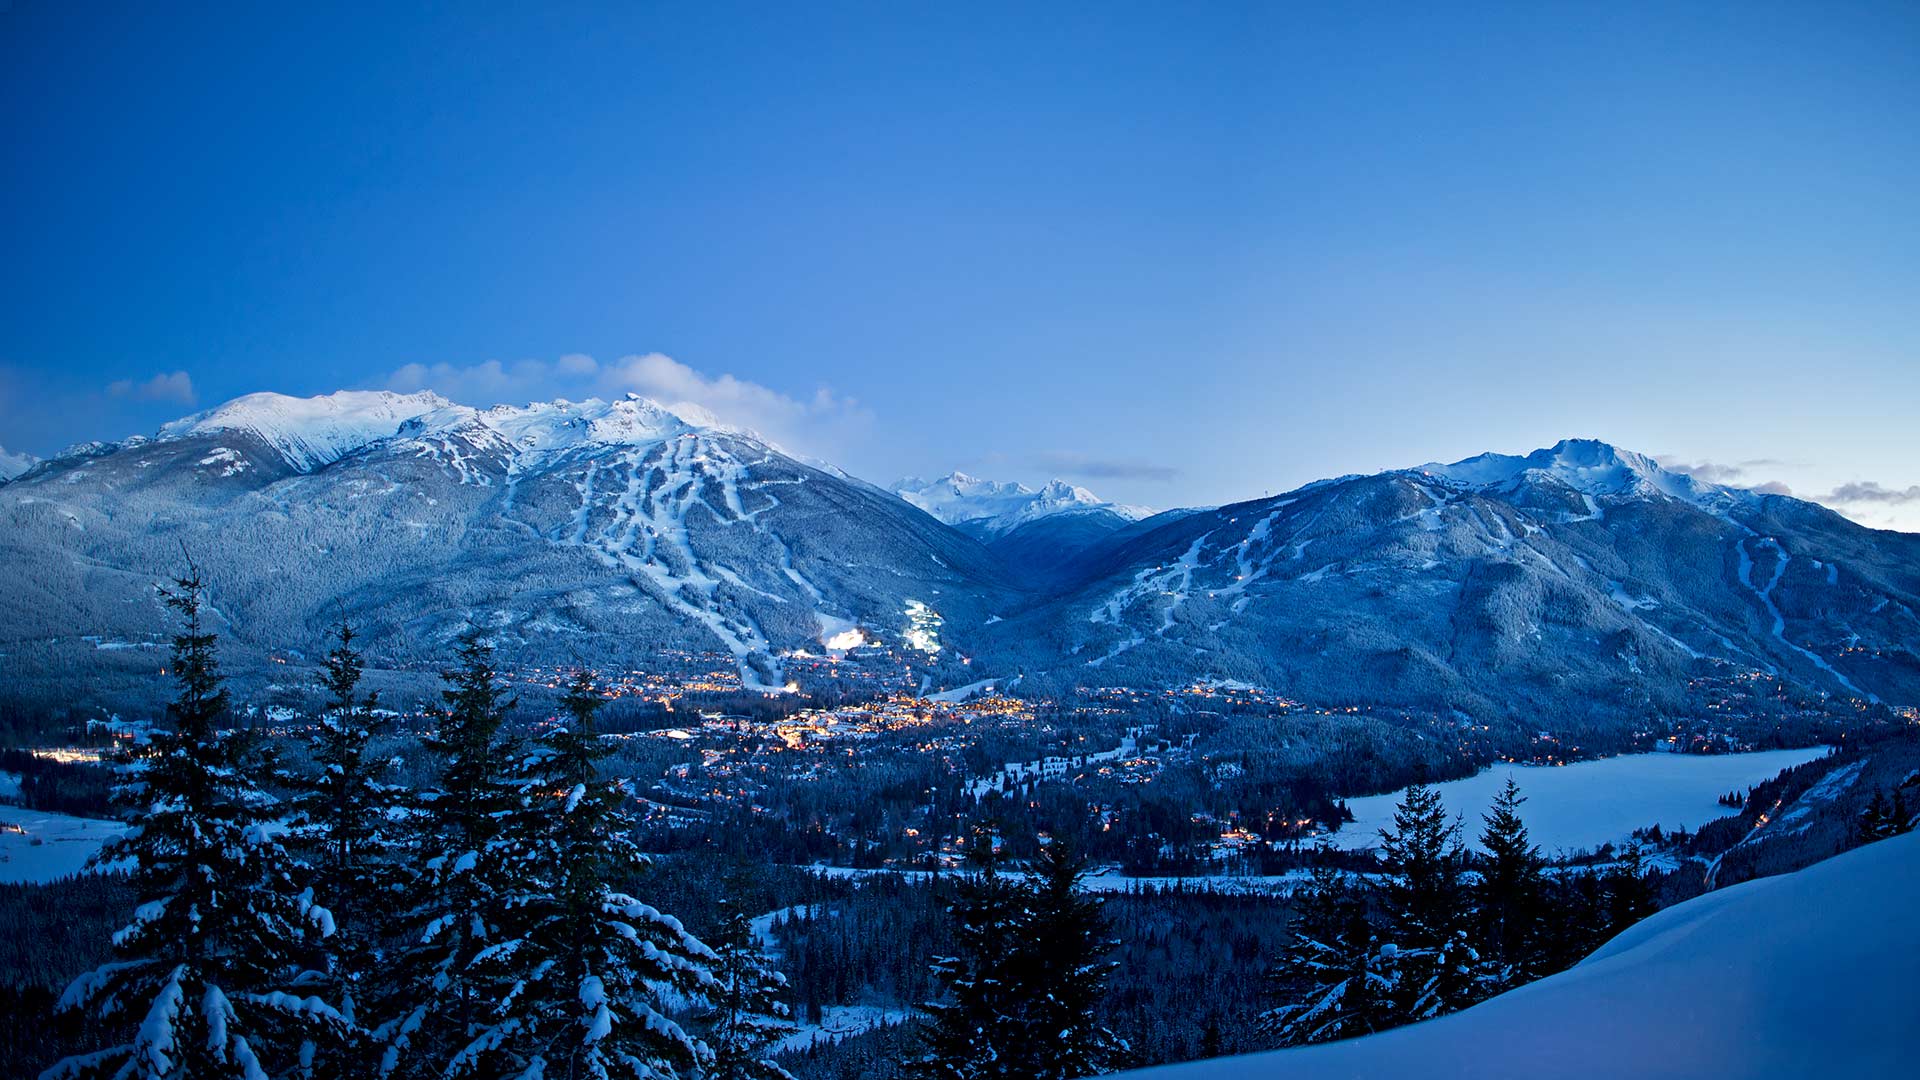 Winter-Dual-Mountain-Evening-Lights-Snowy-Trees-Village-DavidMcColm